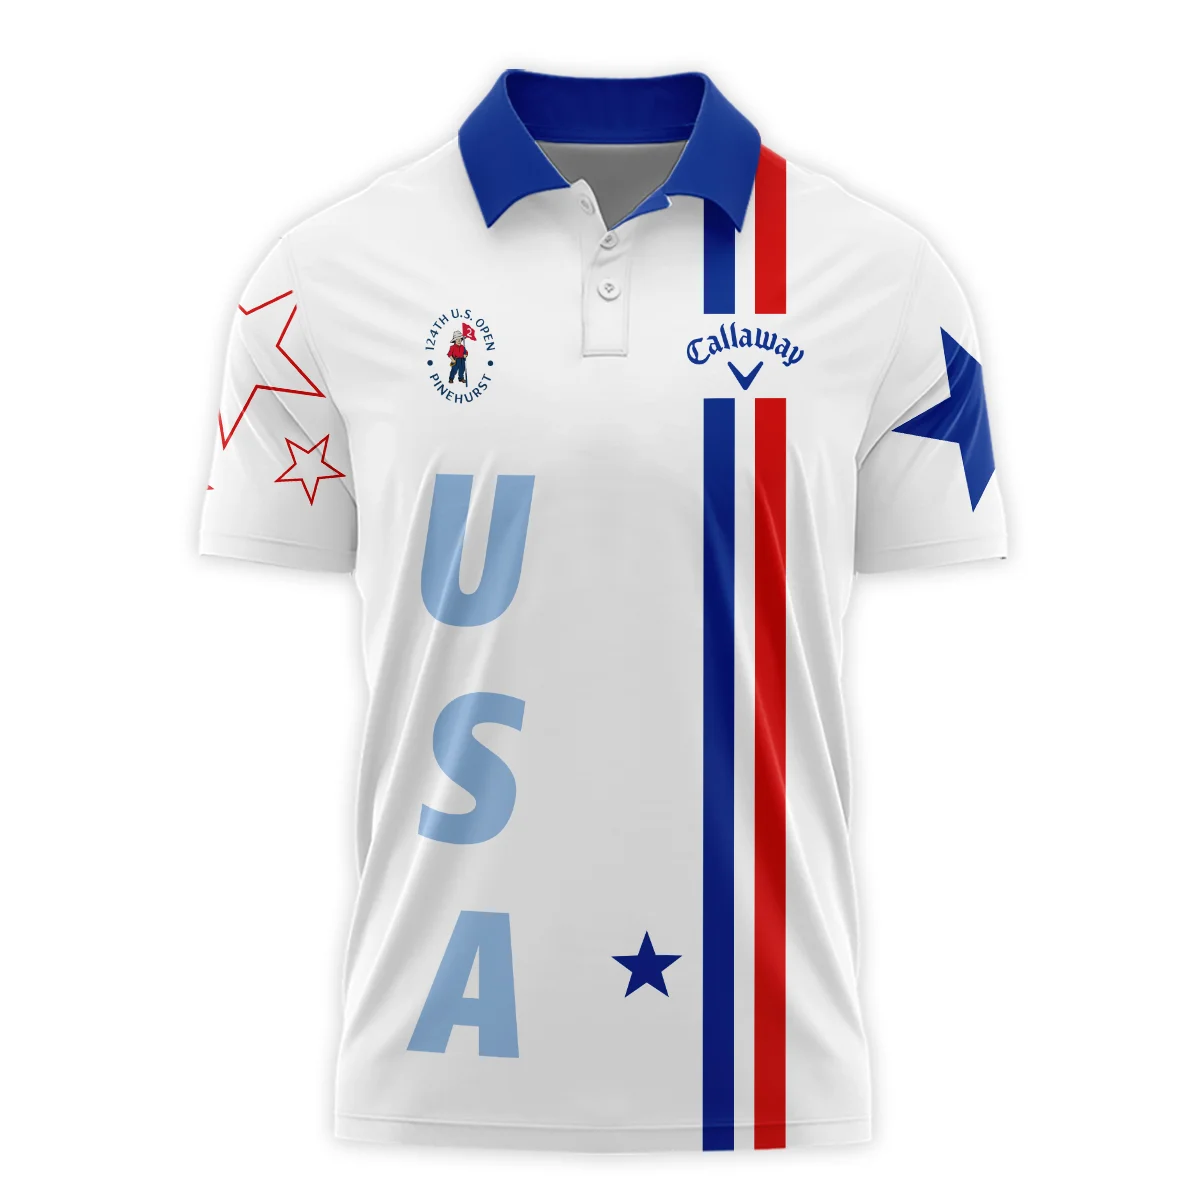 124th U.S. Open Pinehurst Callaway Blue Red Line White Vneck Polo Shirt Style Classic Polo Shirt For Men